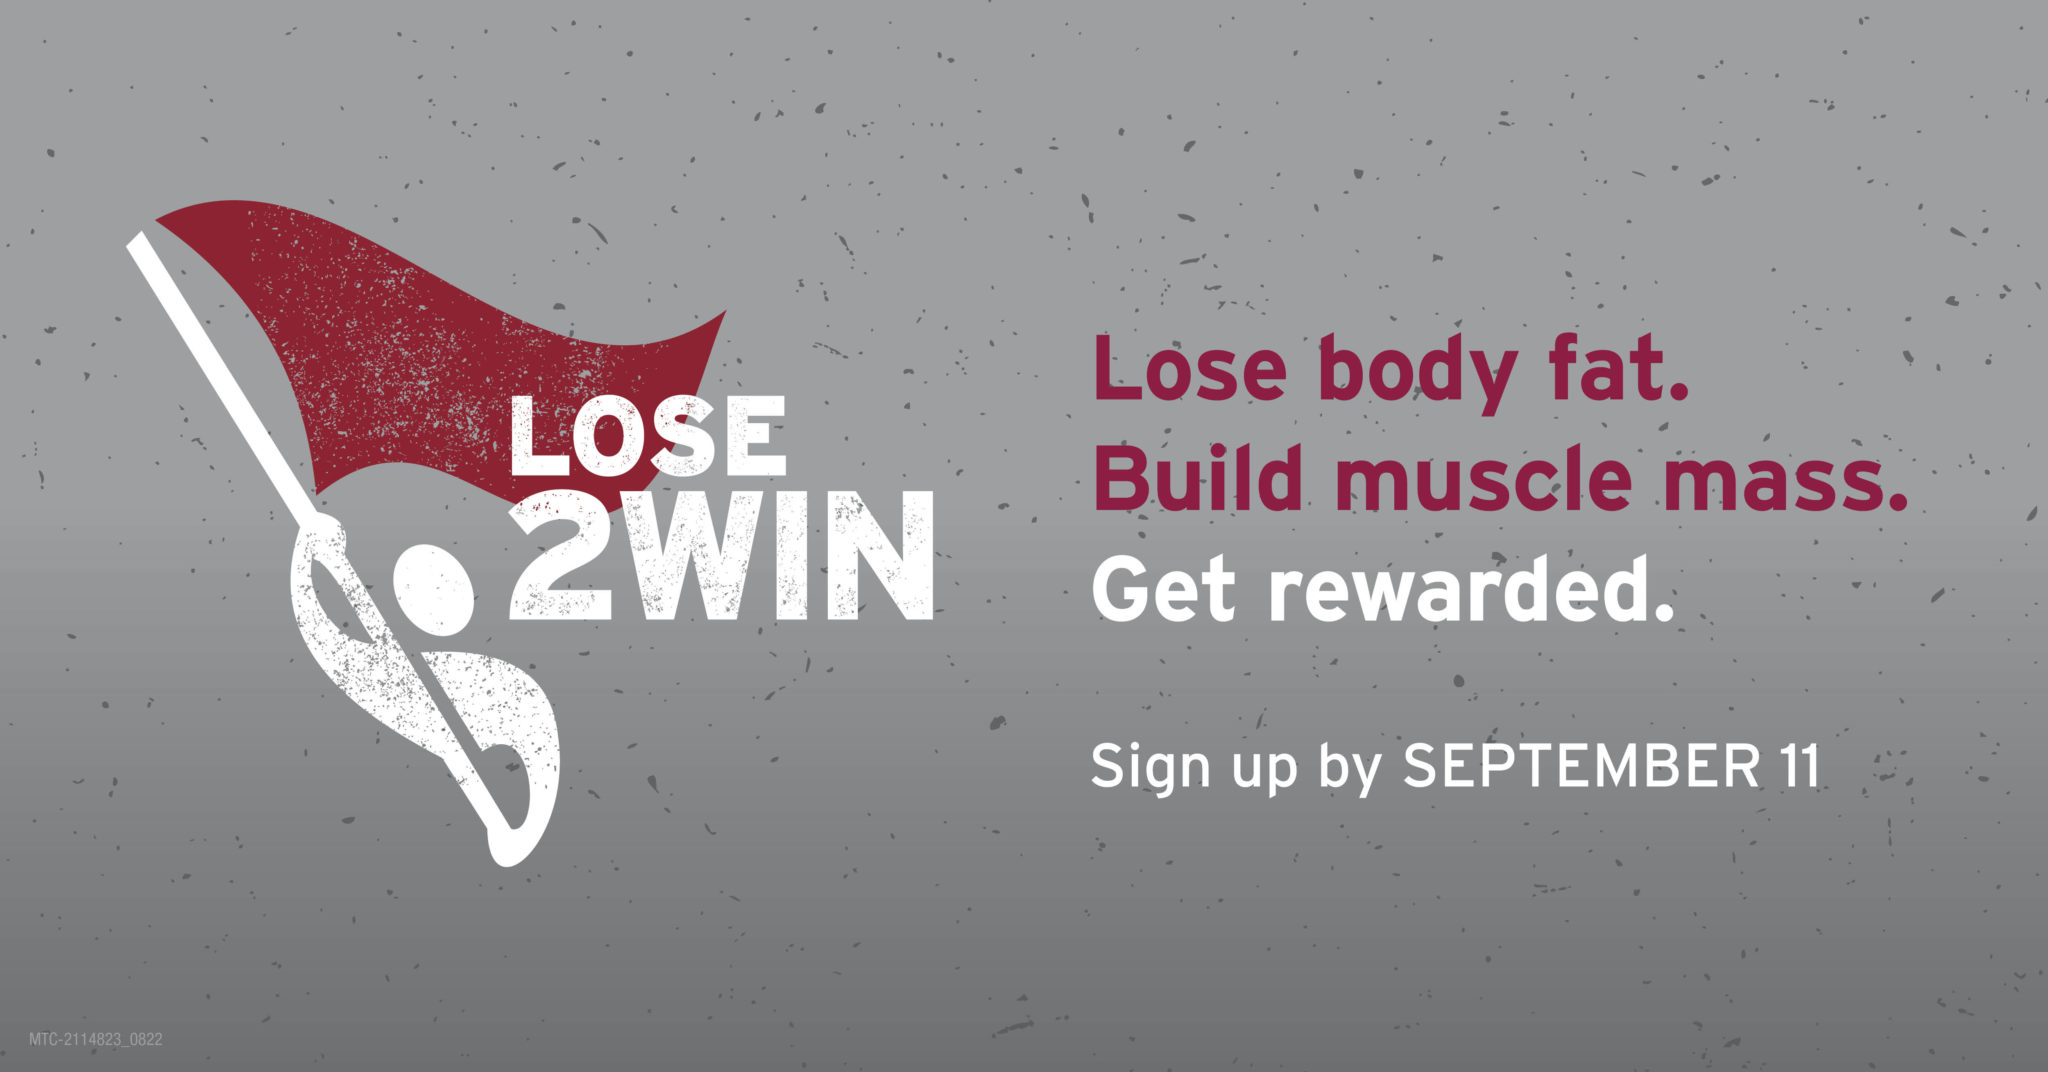 Lose 2 Win. Lose body fat. Build muscle mass. Get rewarded!